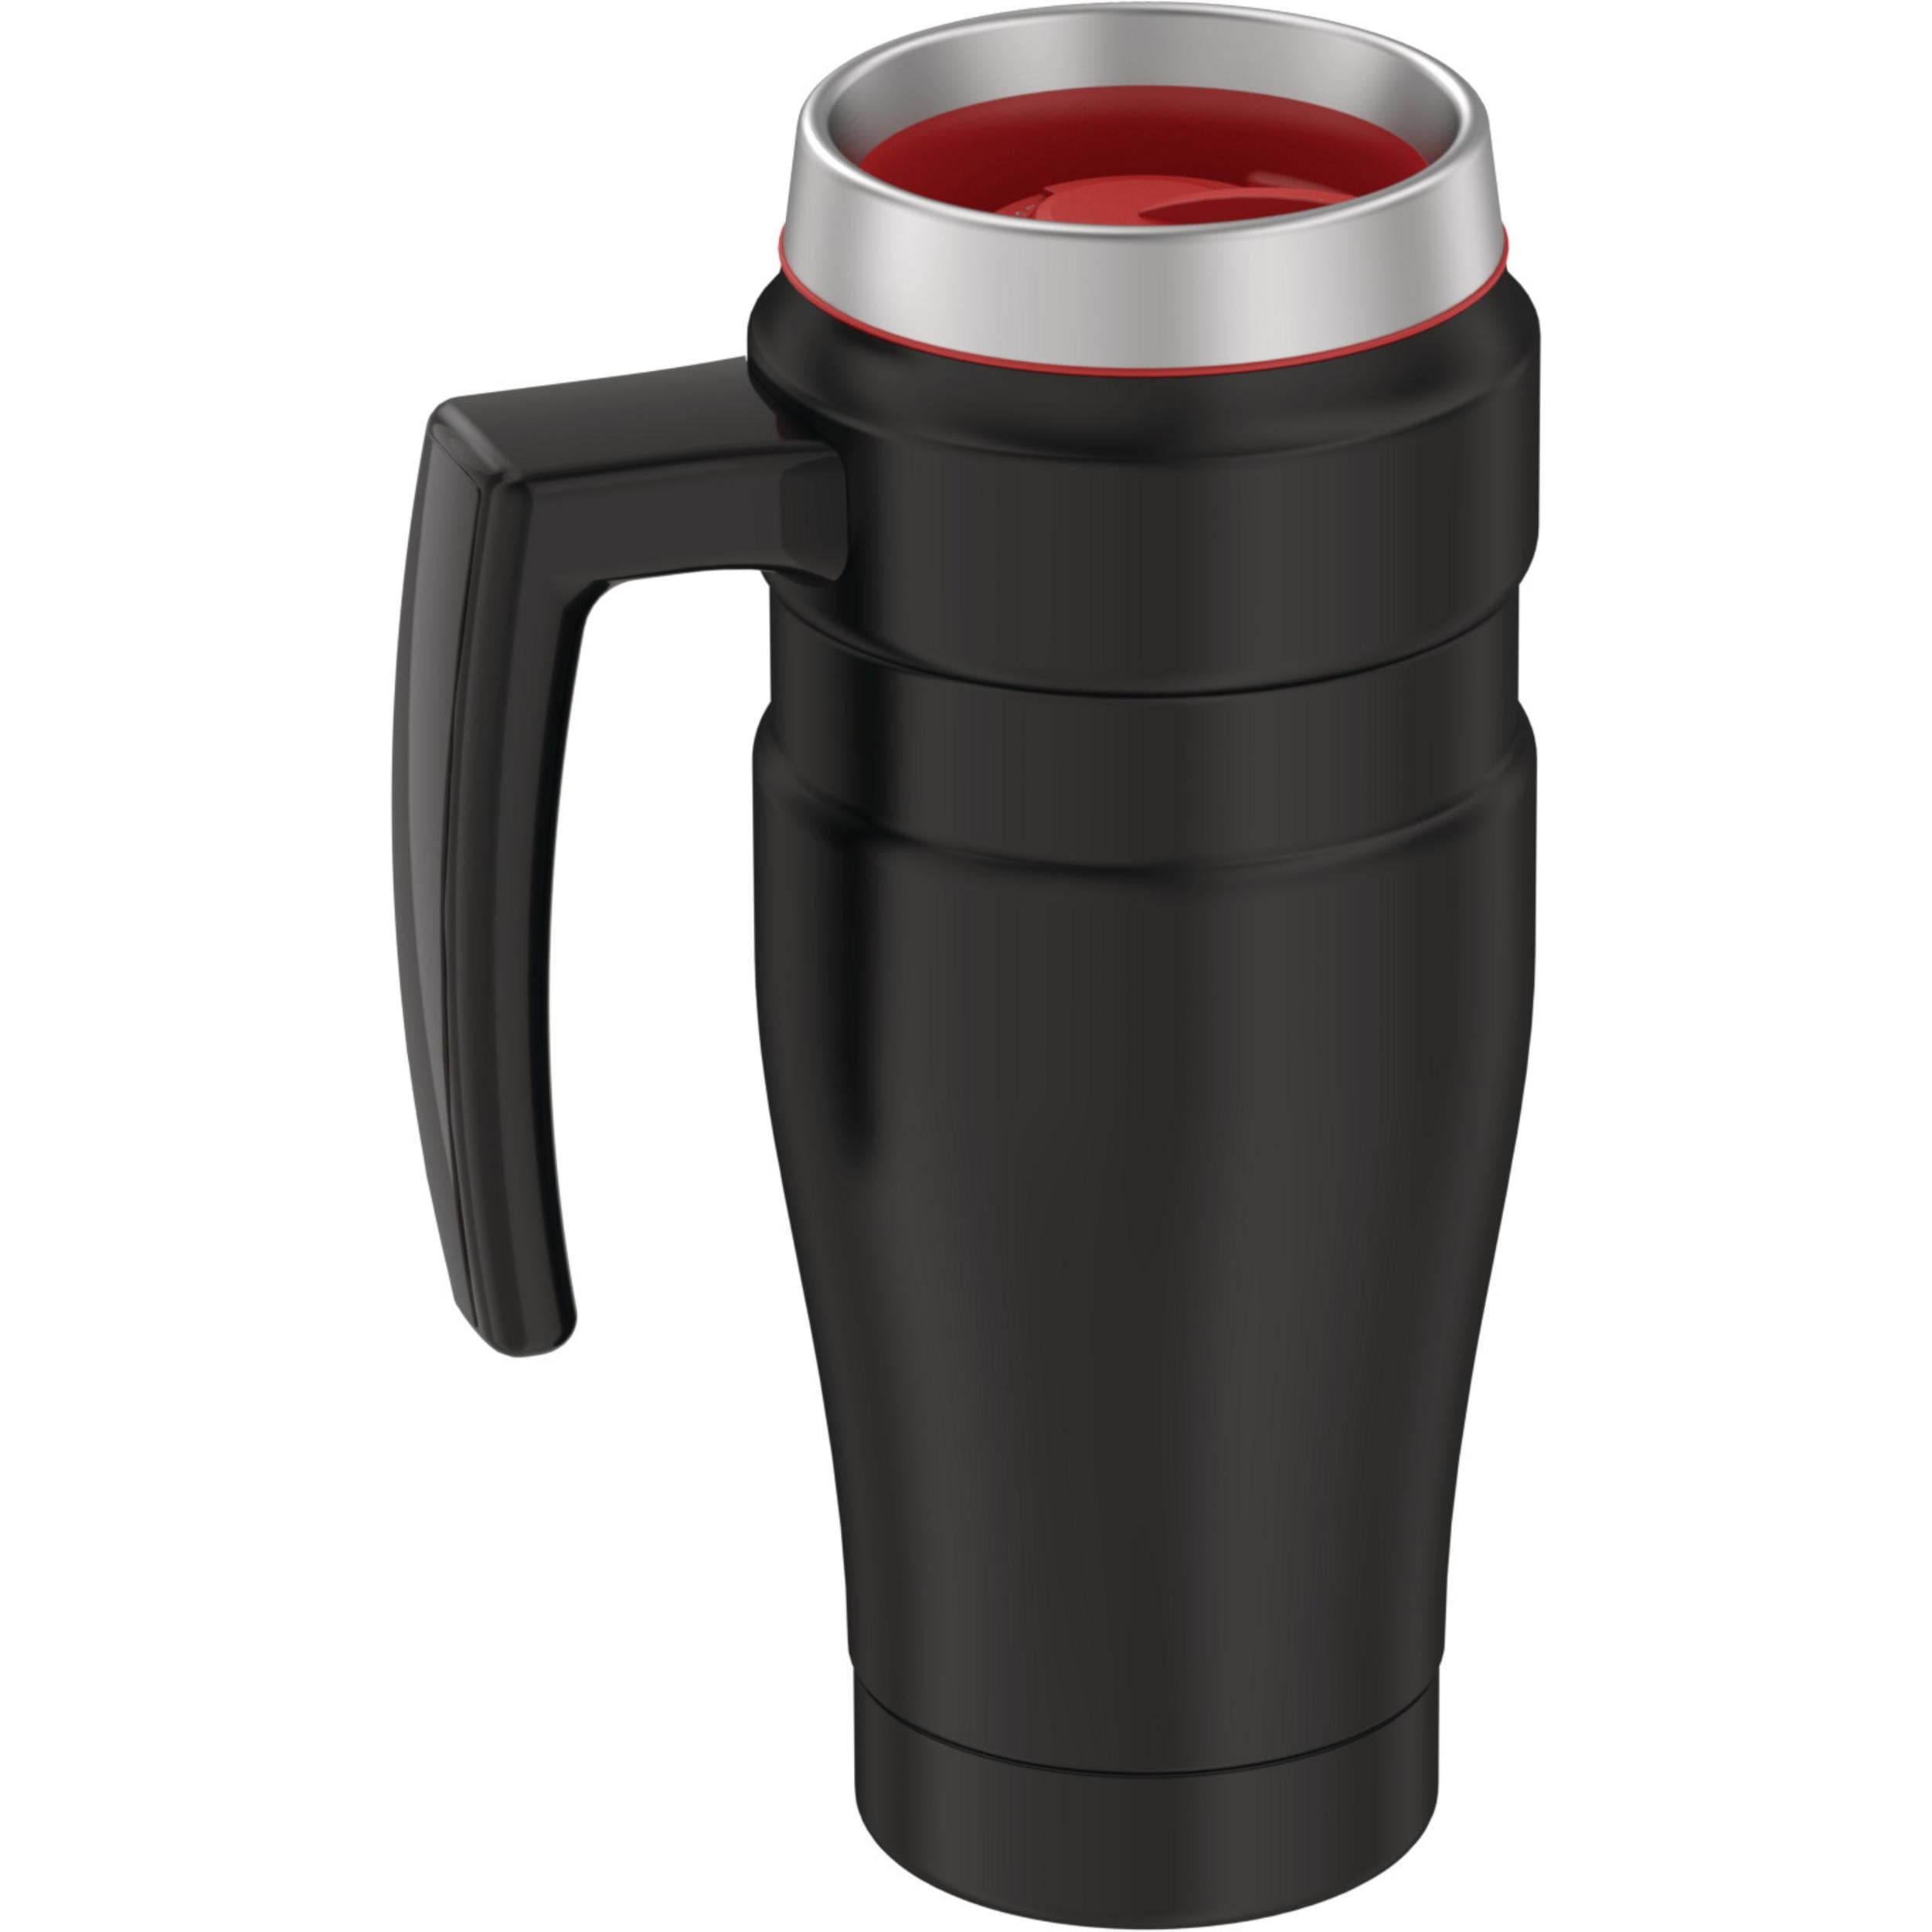 Thermos 16 oz Stainless Steel Coffee Mug - SK1600MDBW4